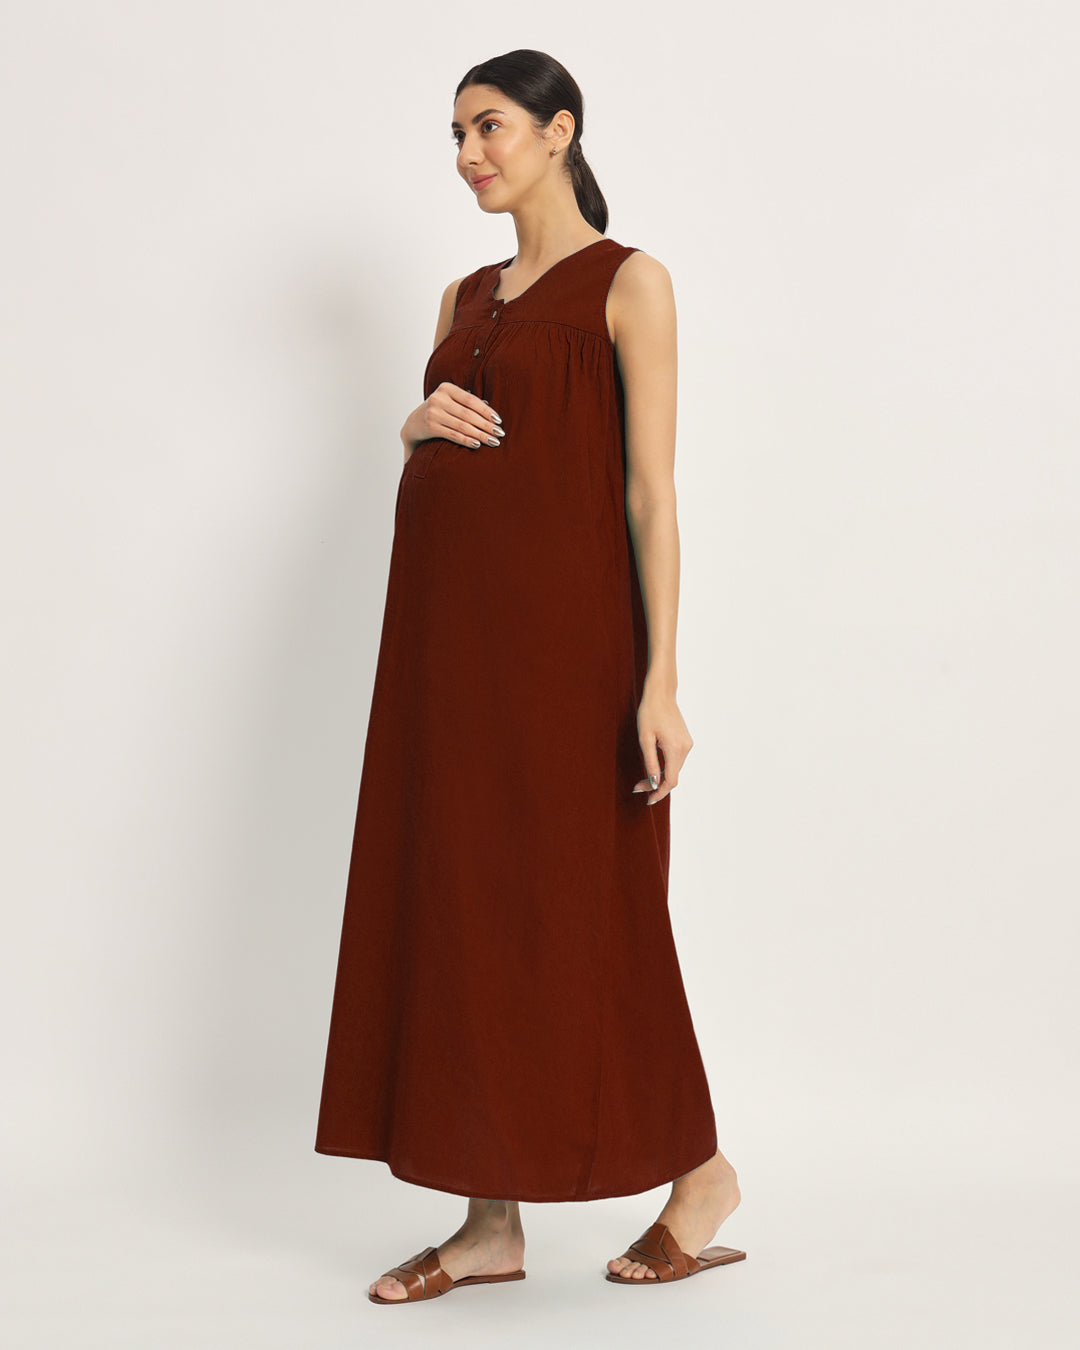 Combo: Iris Pink & Russet Red Mommylicious Maternity & Nursing Dress